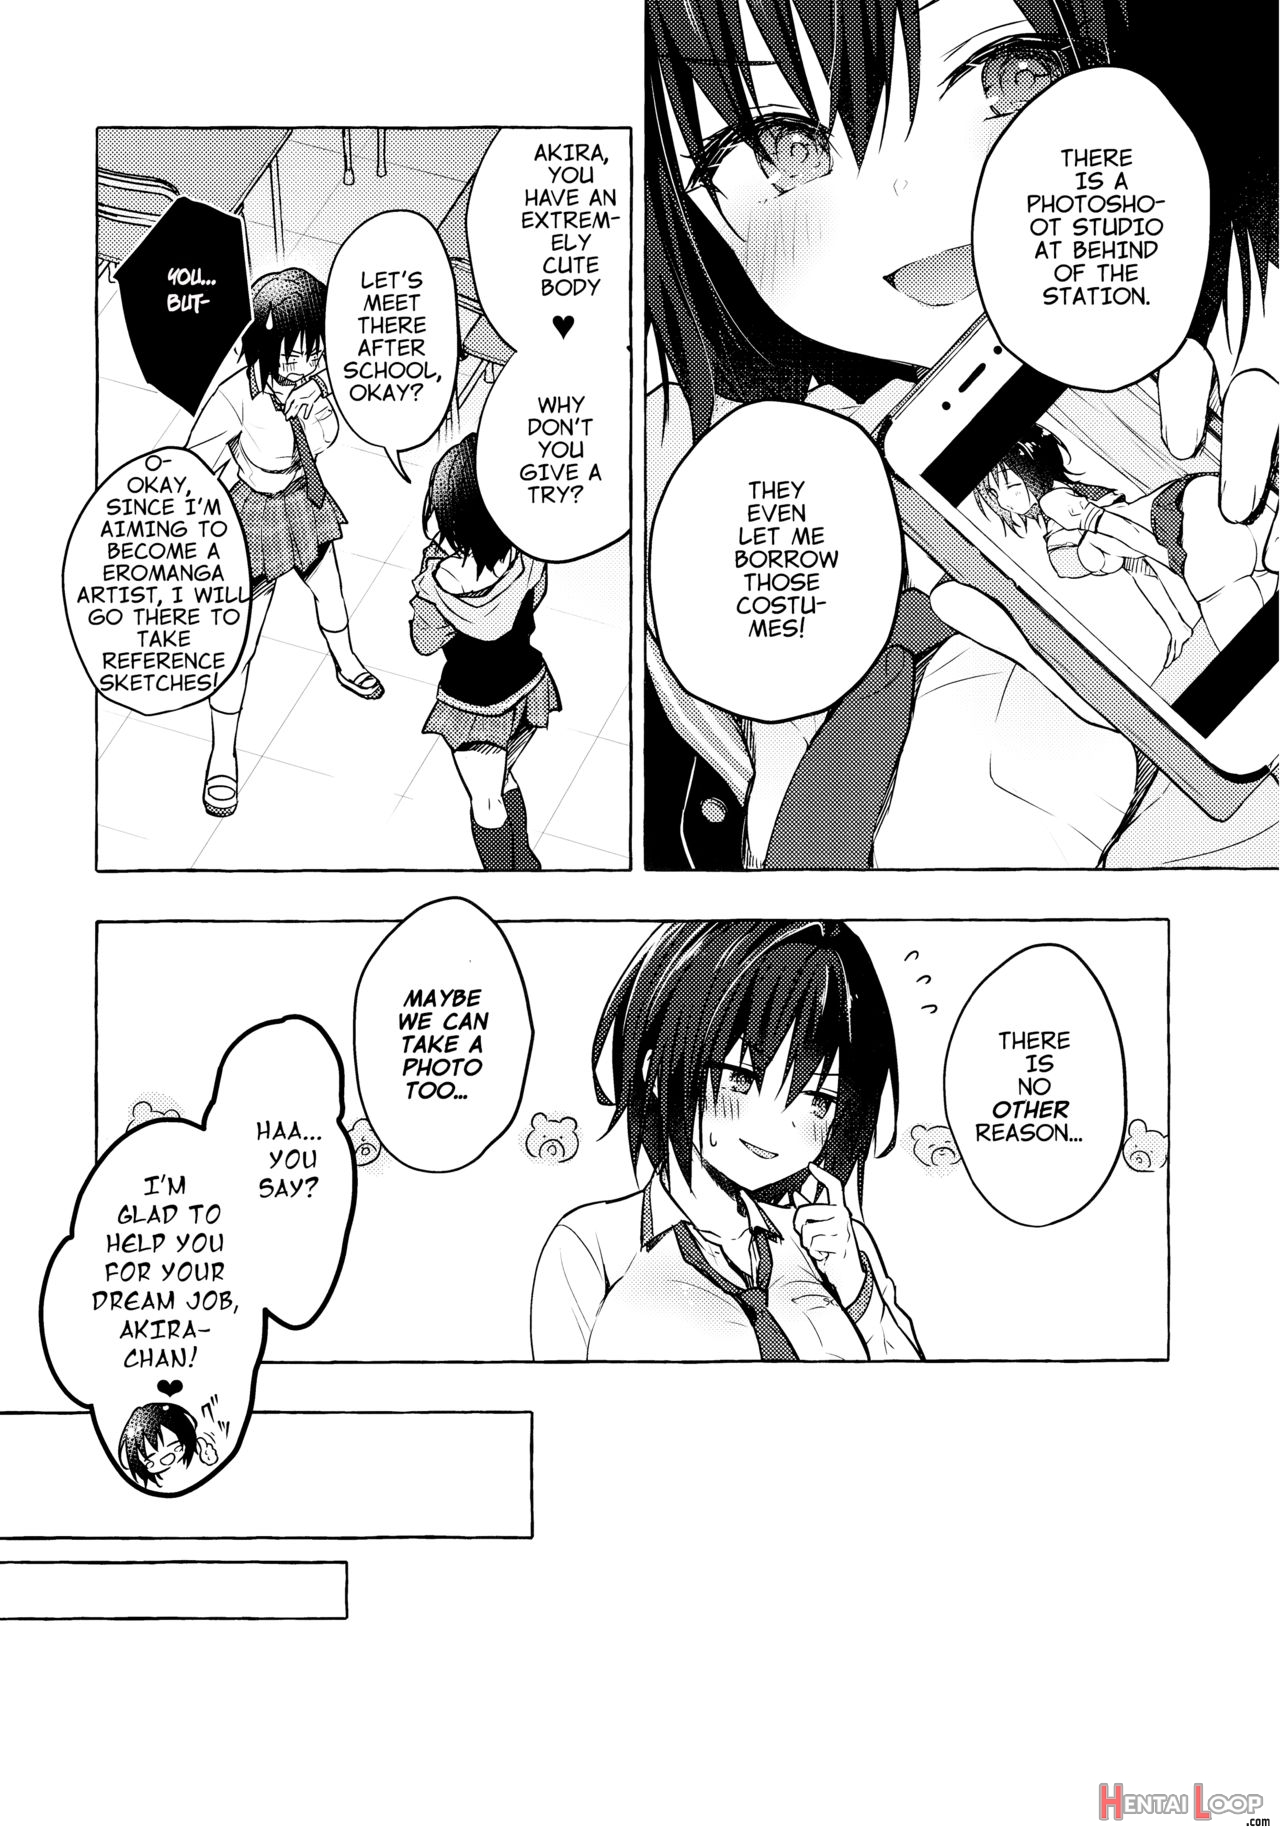 Akira-kun's Sex Life 4 page 5